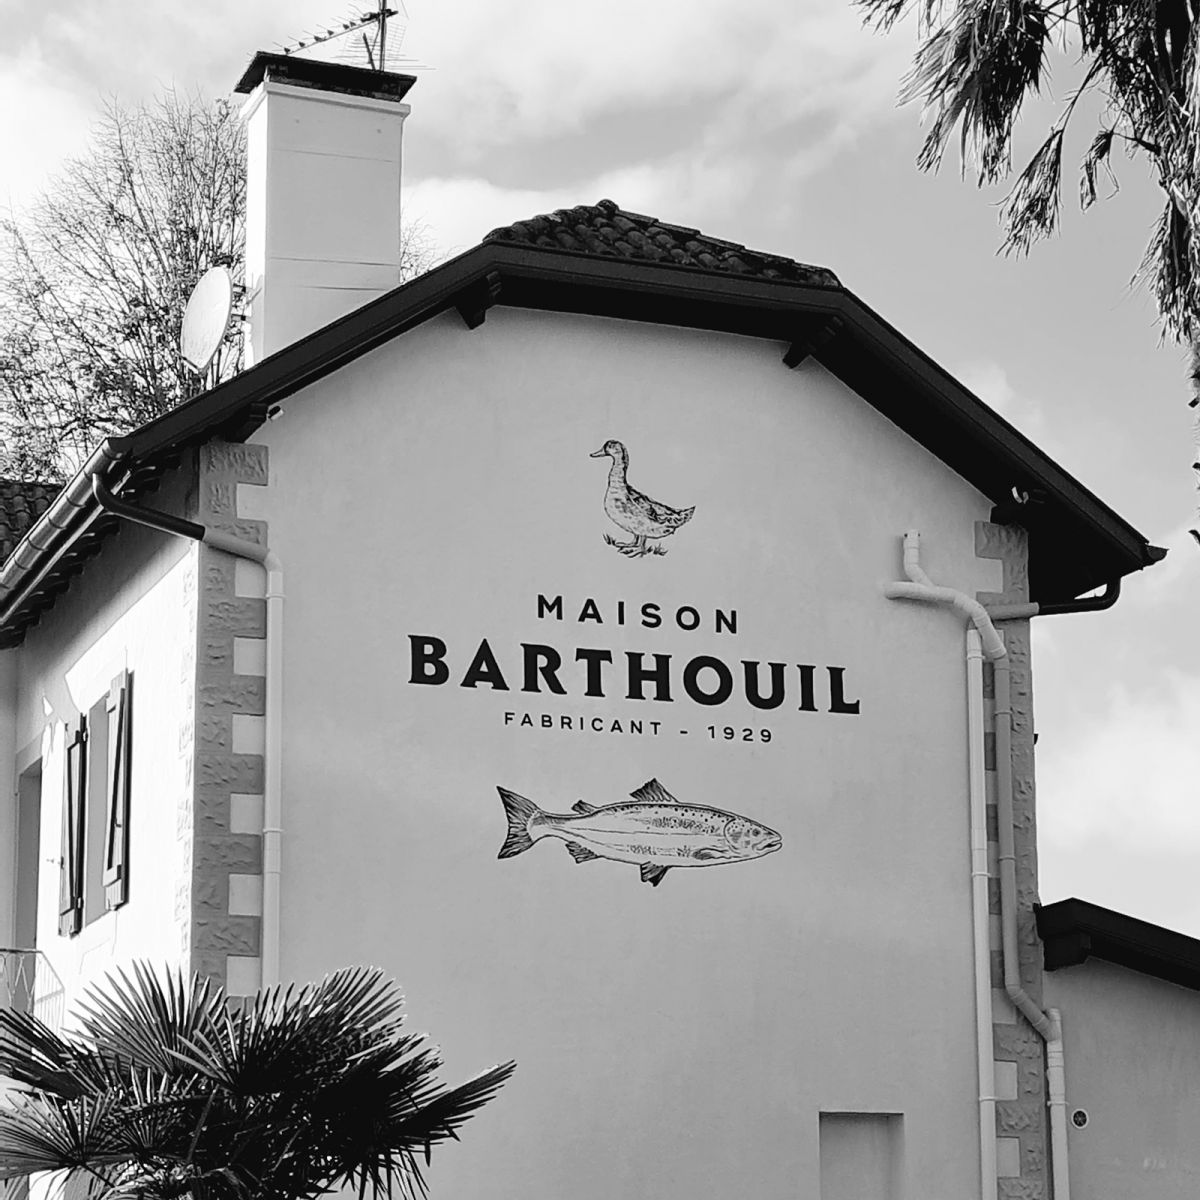 House Barthouil